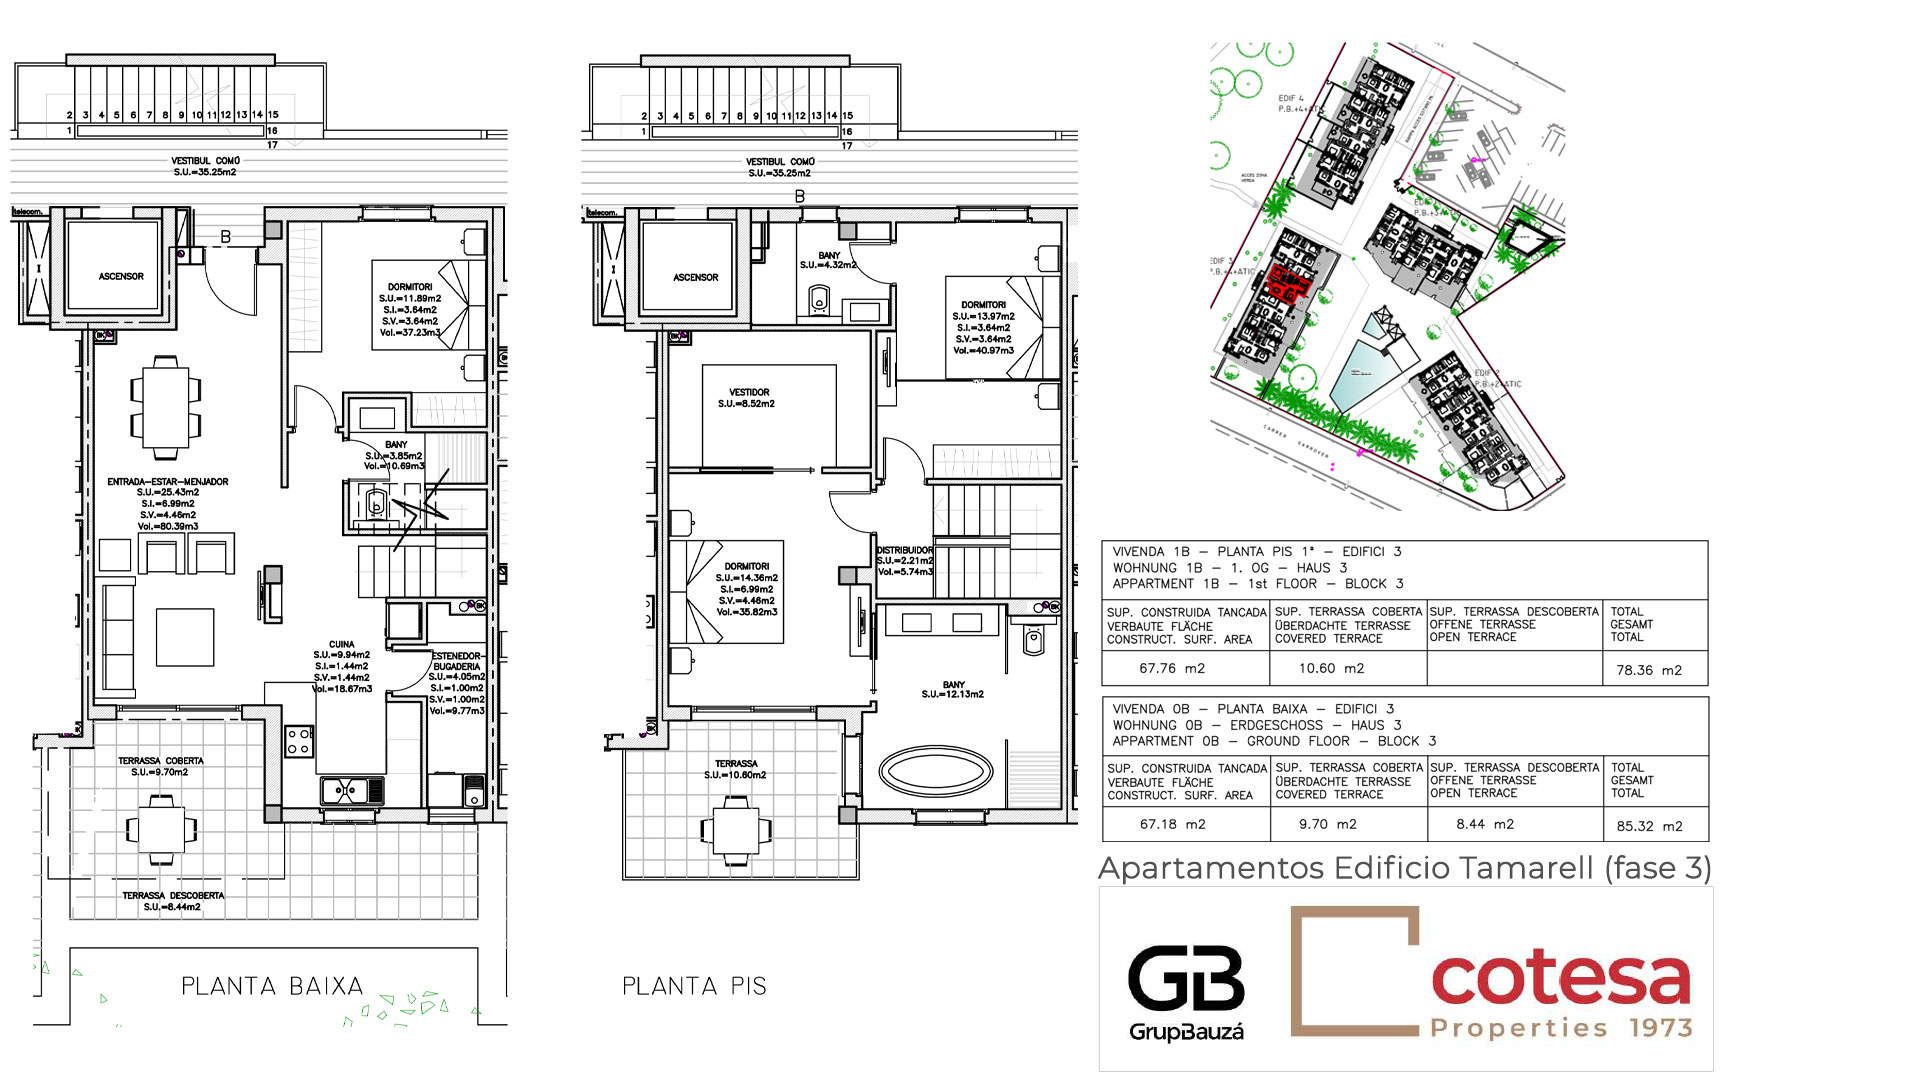 Ground Floor - Apartment B (Duplex)